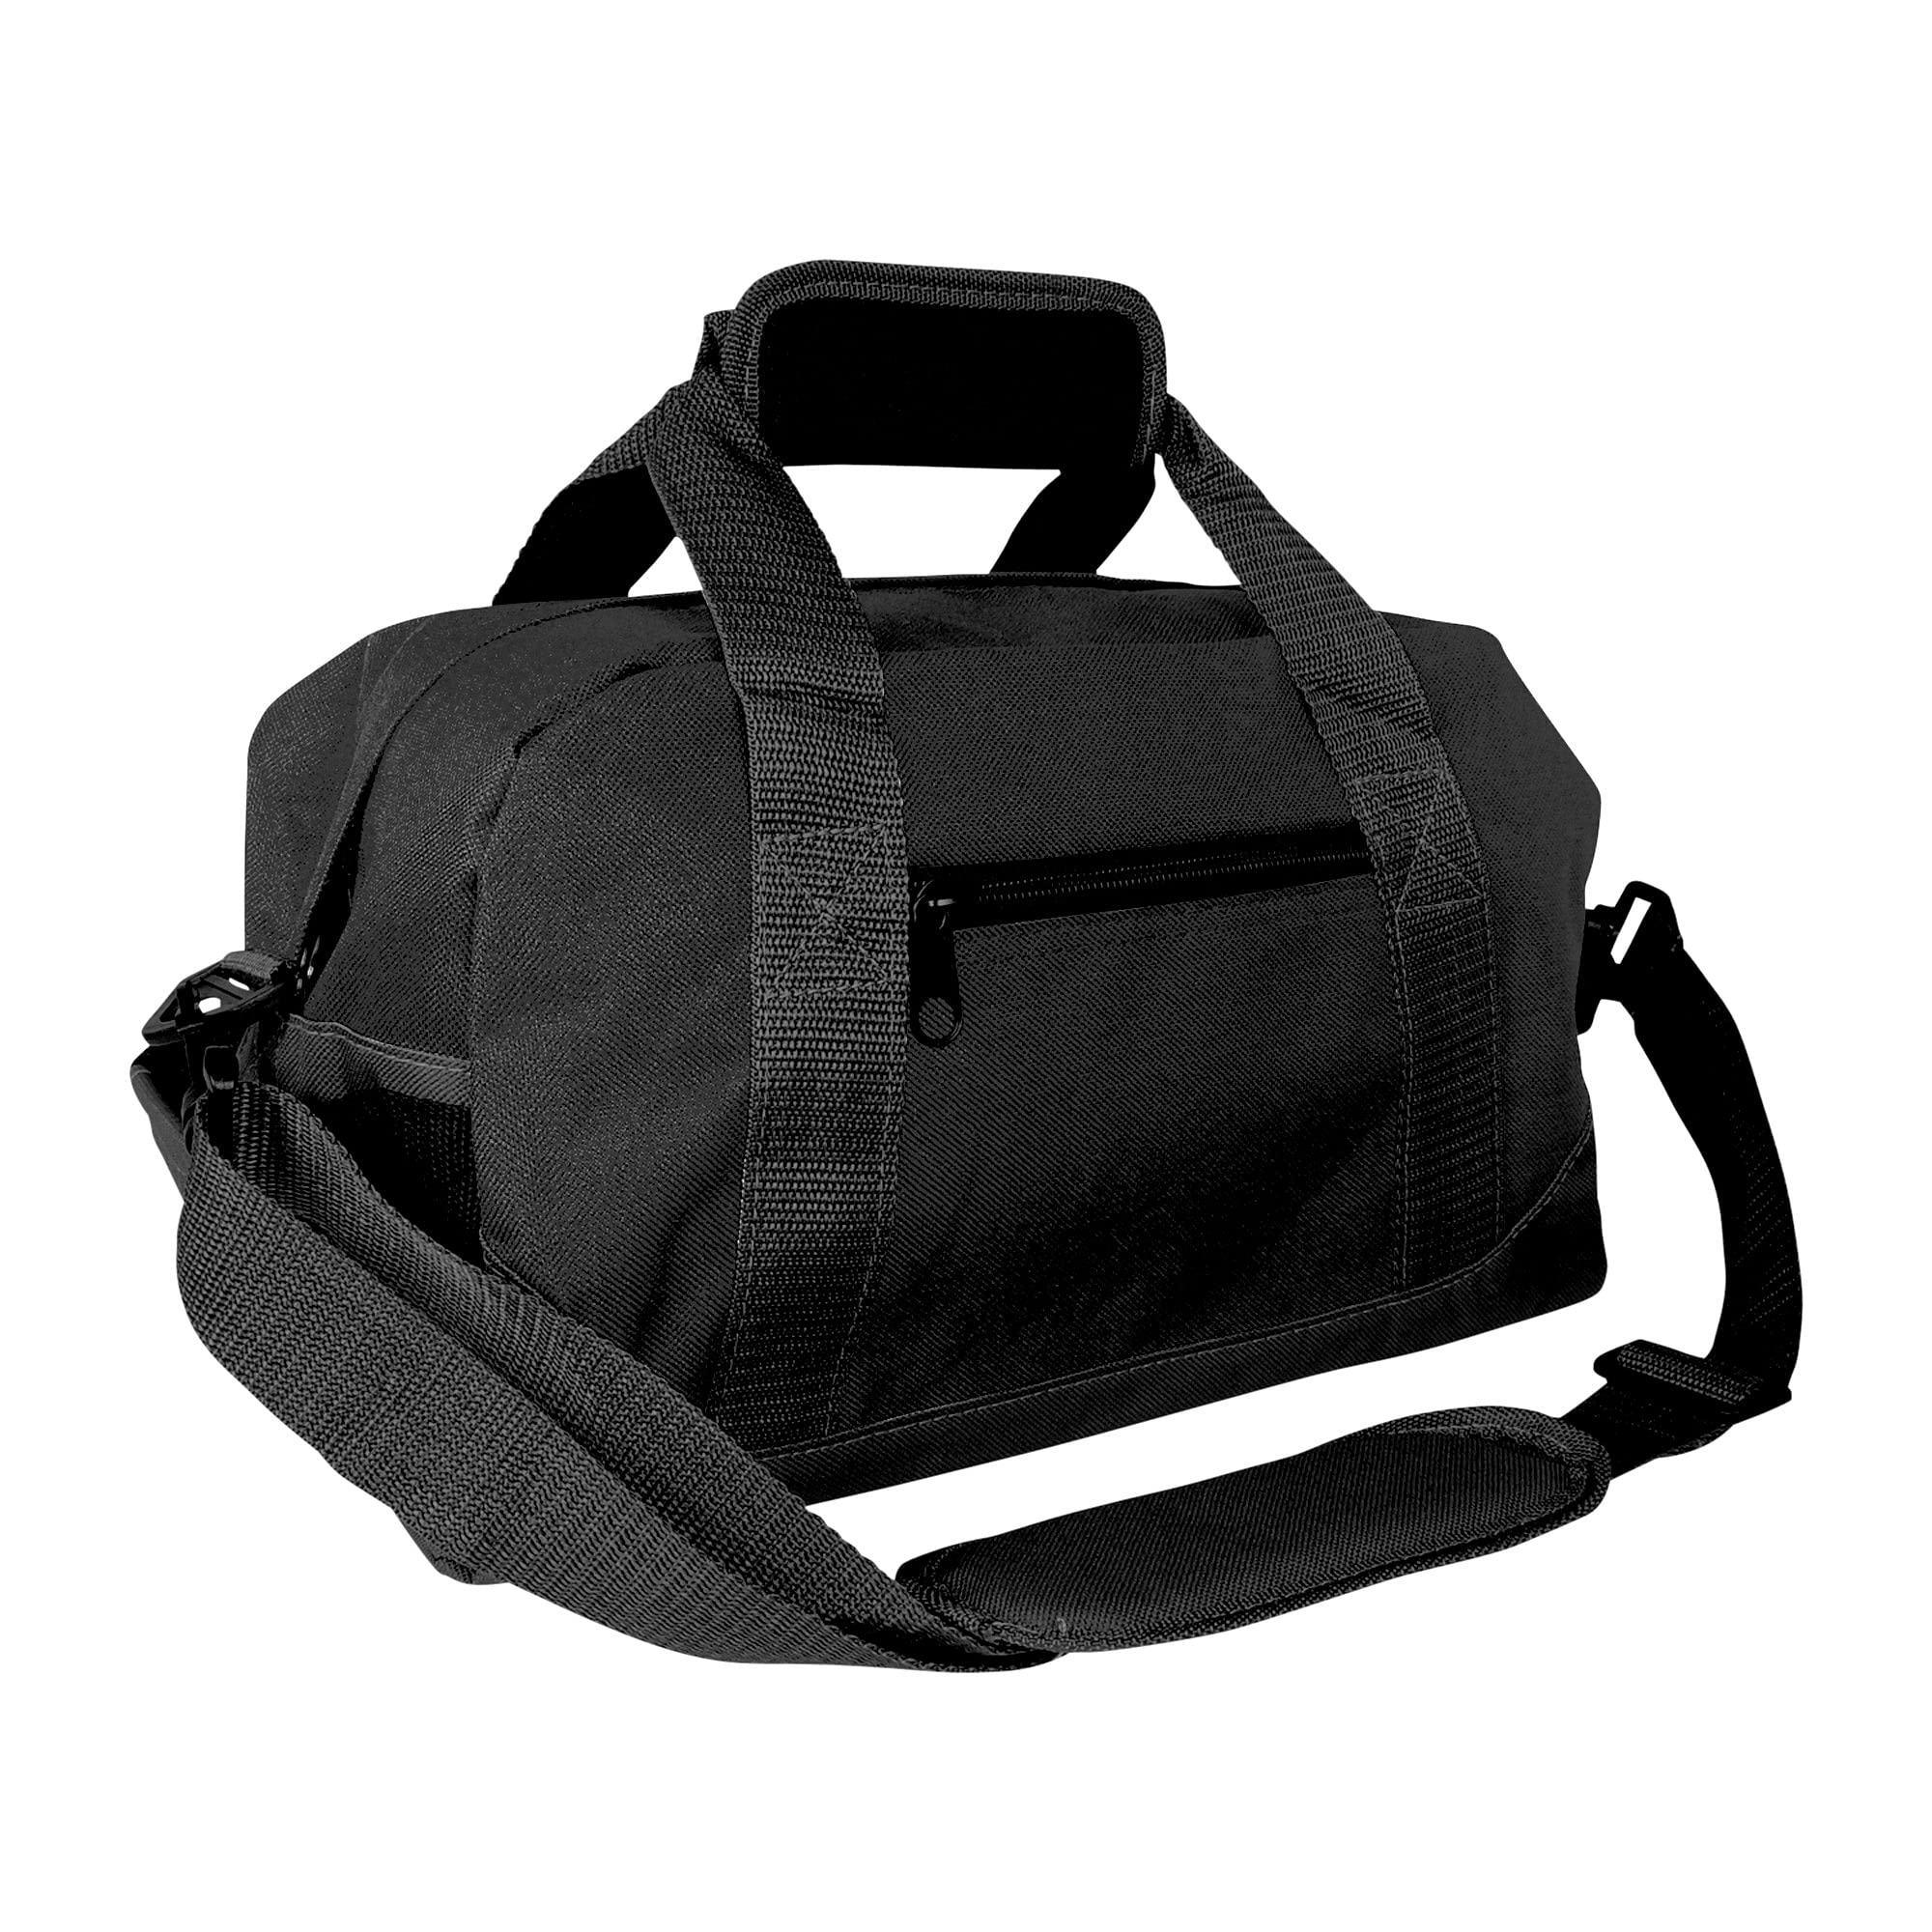 Dalix 14 Small Duffle Bag Two Toned Gym Travel Bag (Purple)